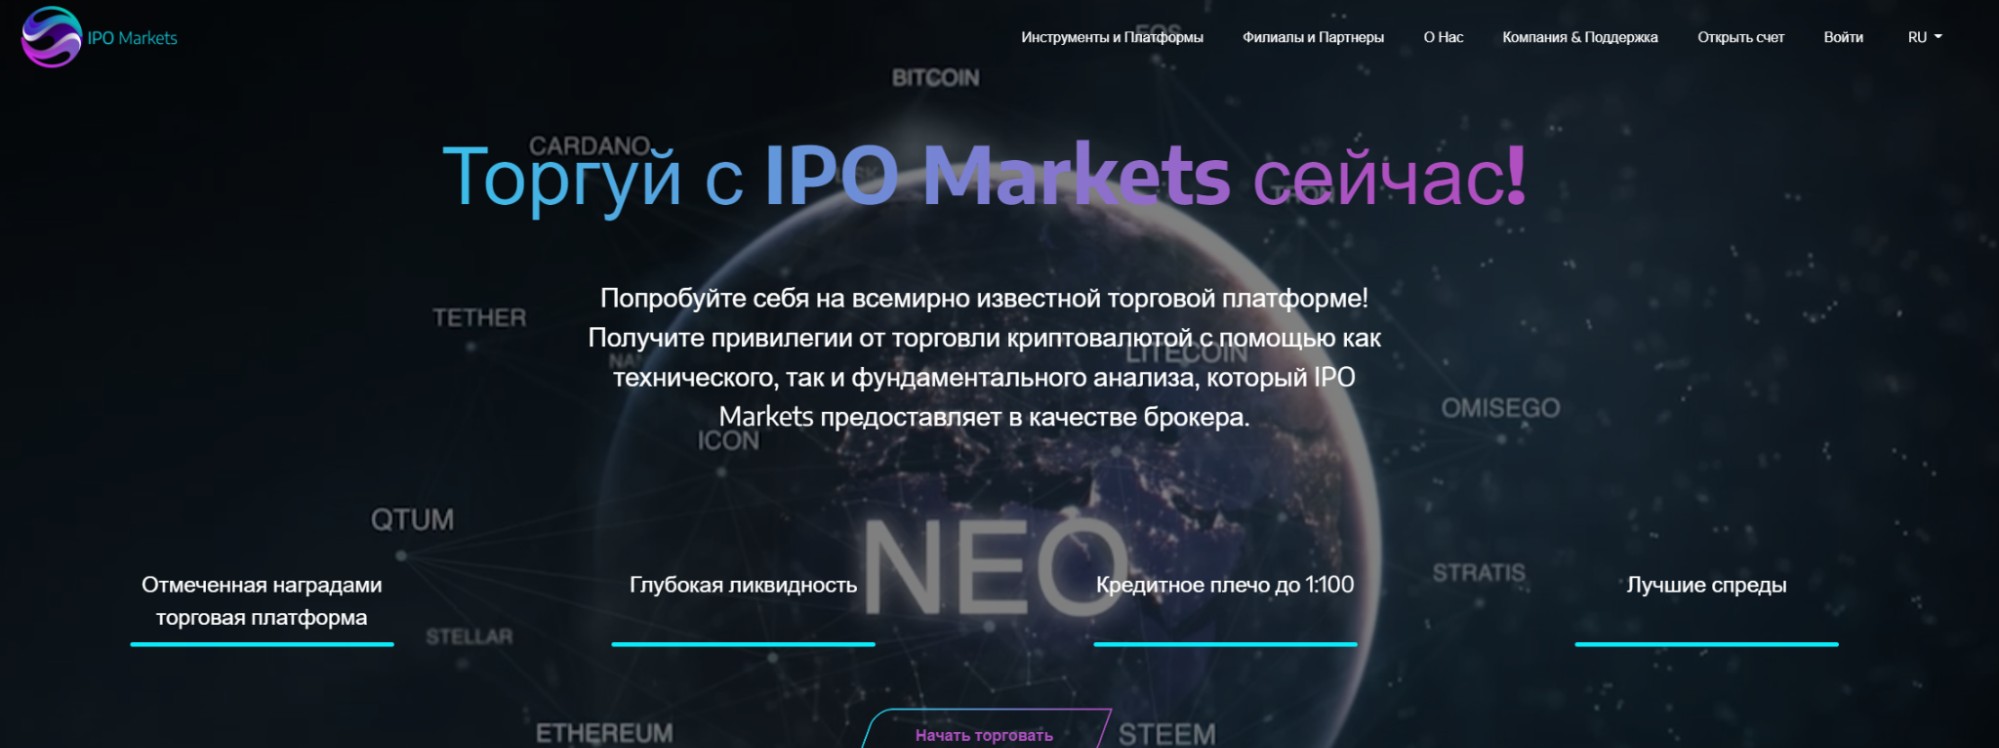 Ipo Markets net брокер